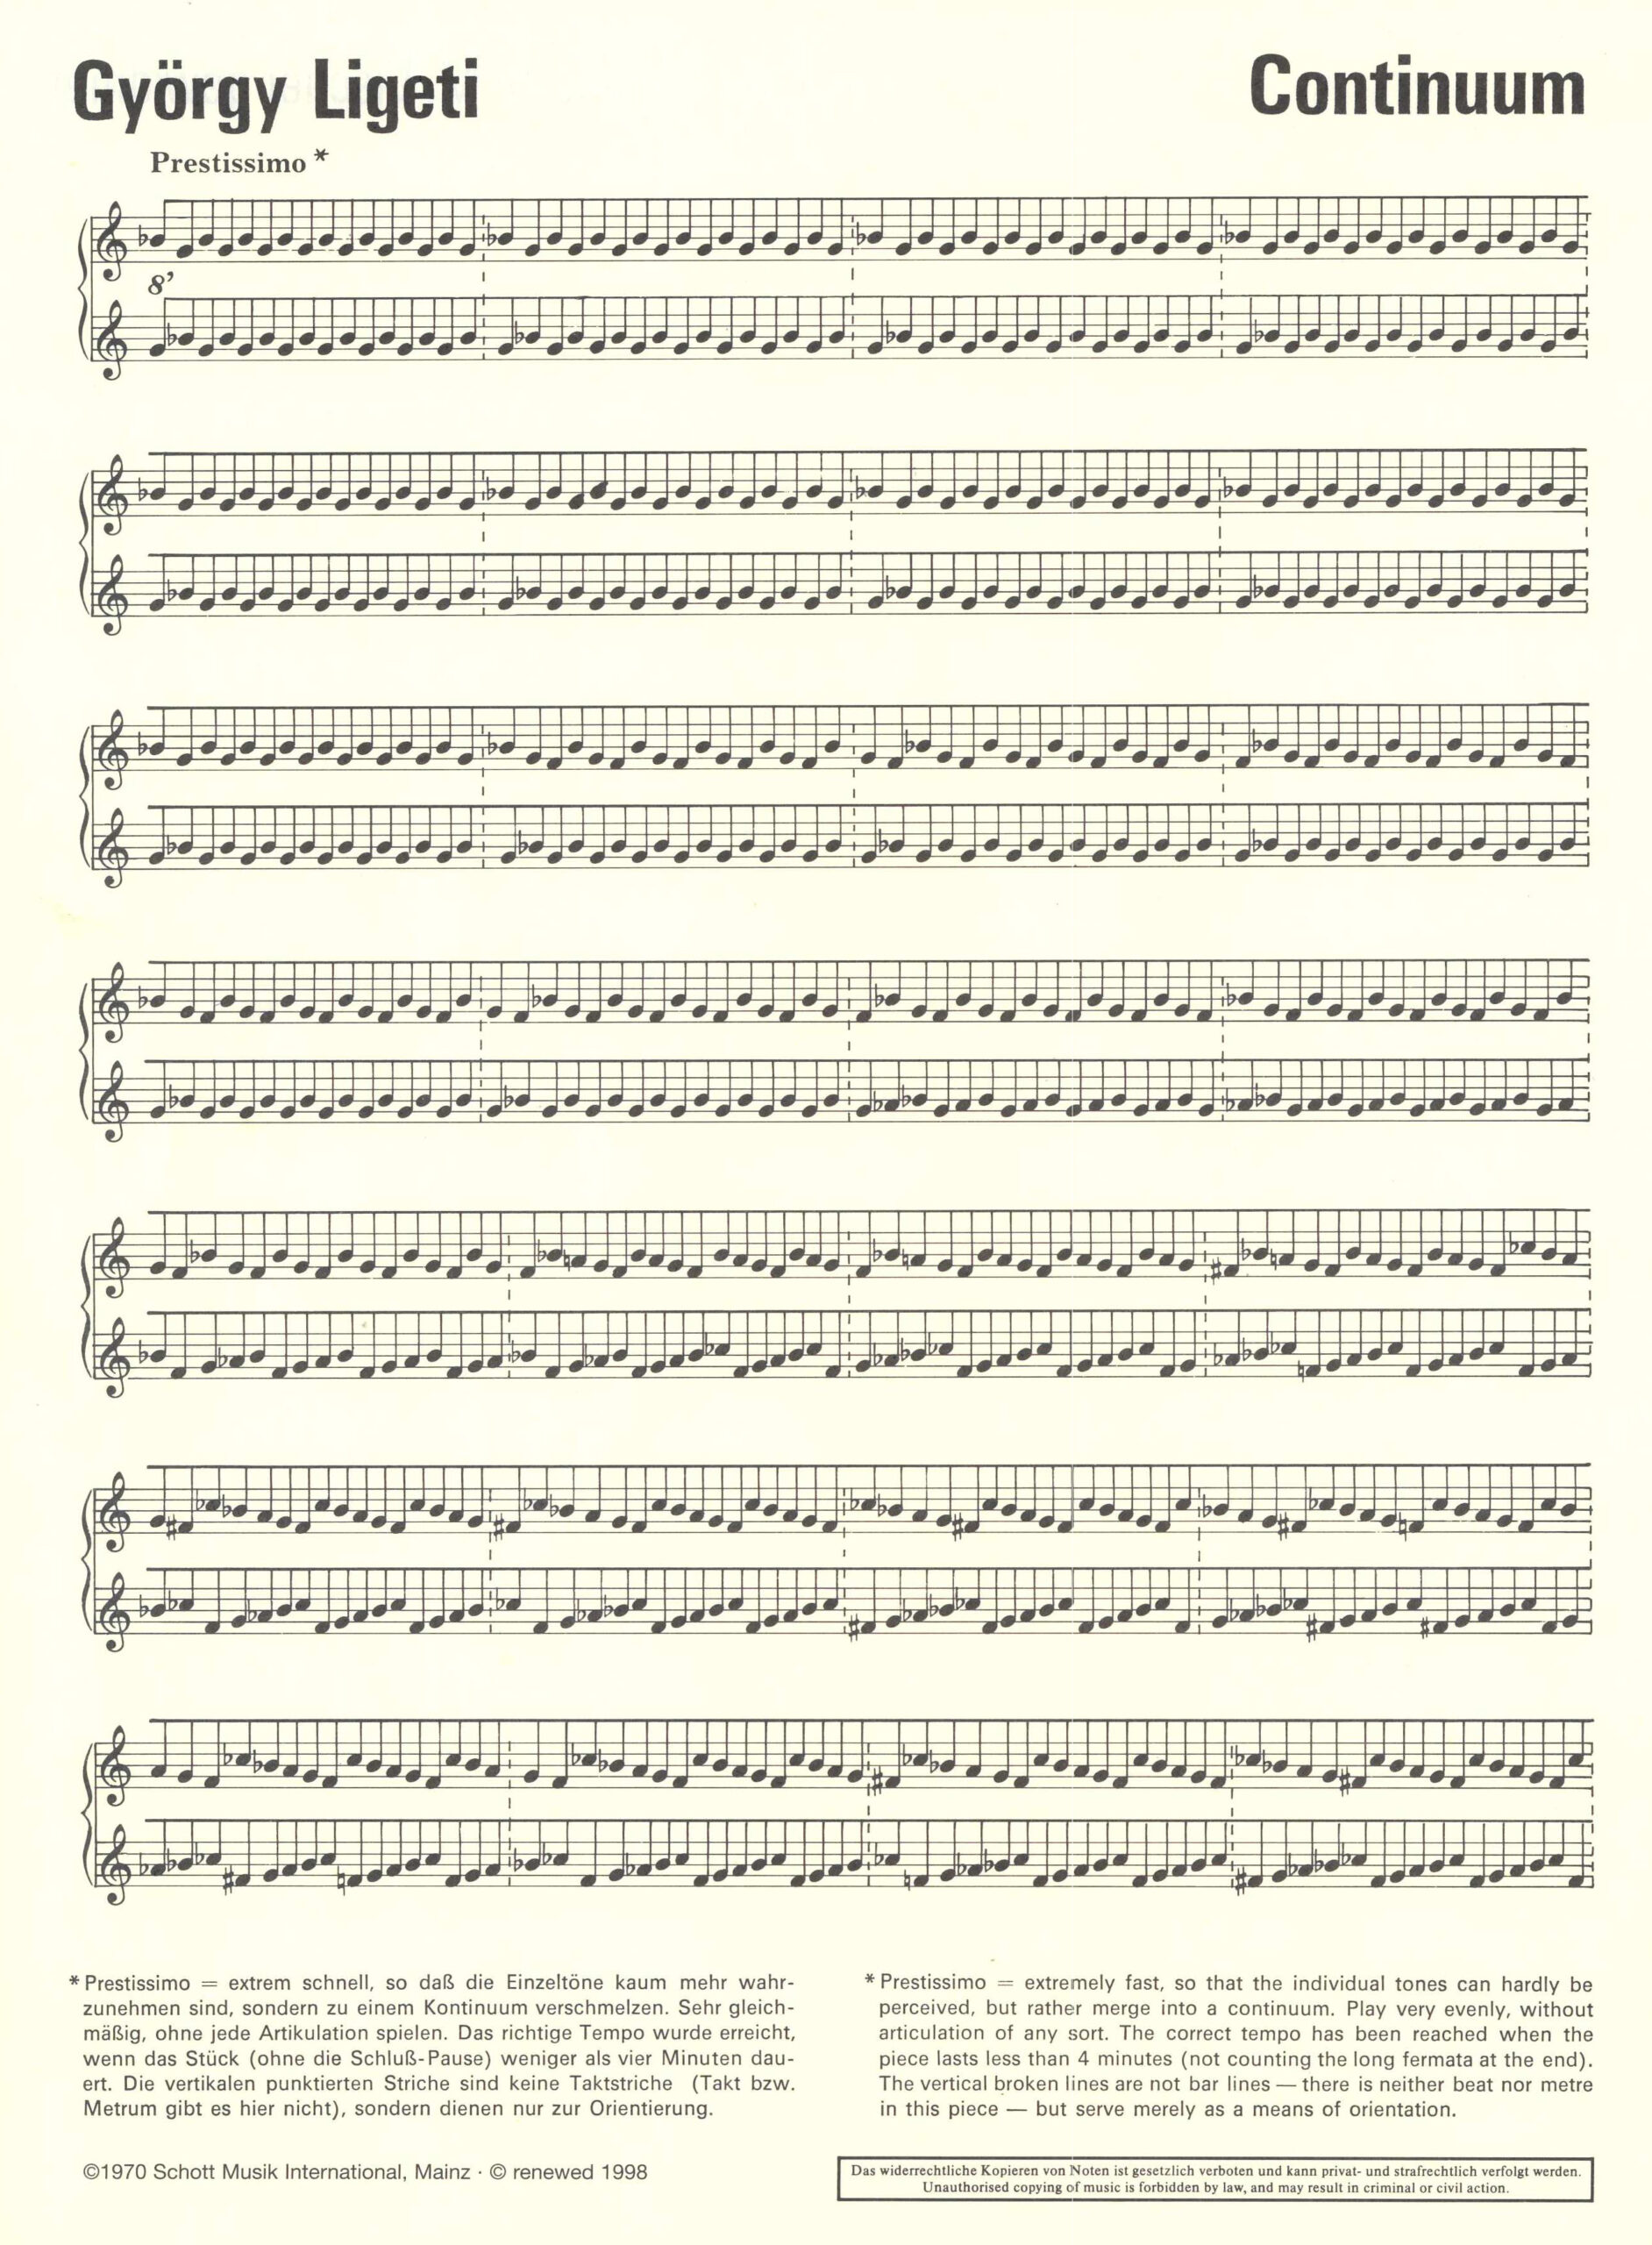 pagina uit Continuum (1967) (c) 1998, Schott Musik International, Mainz